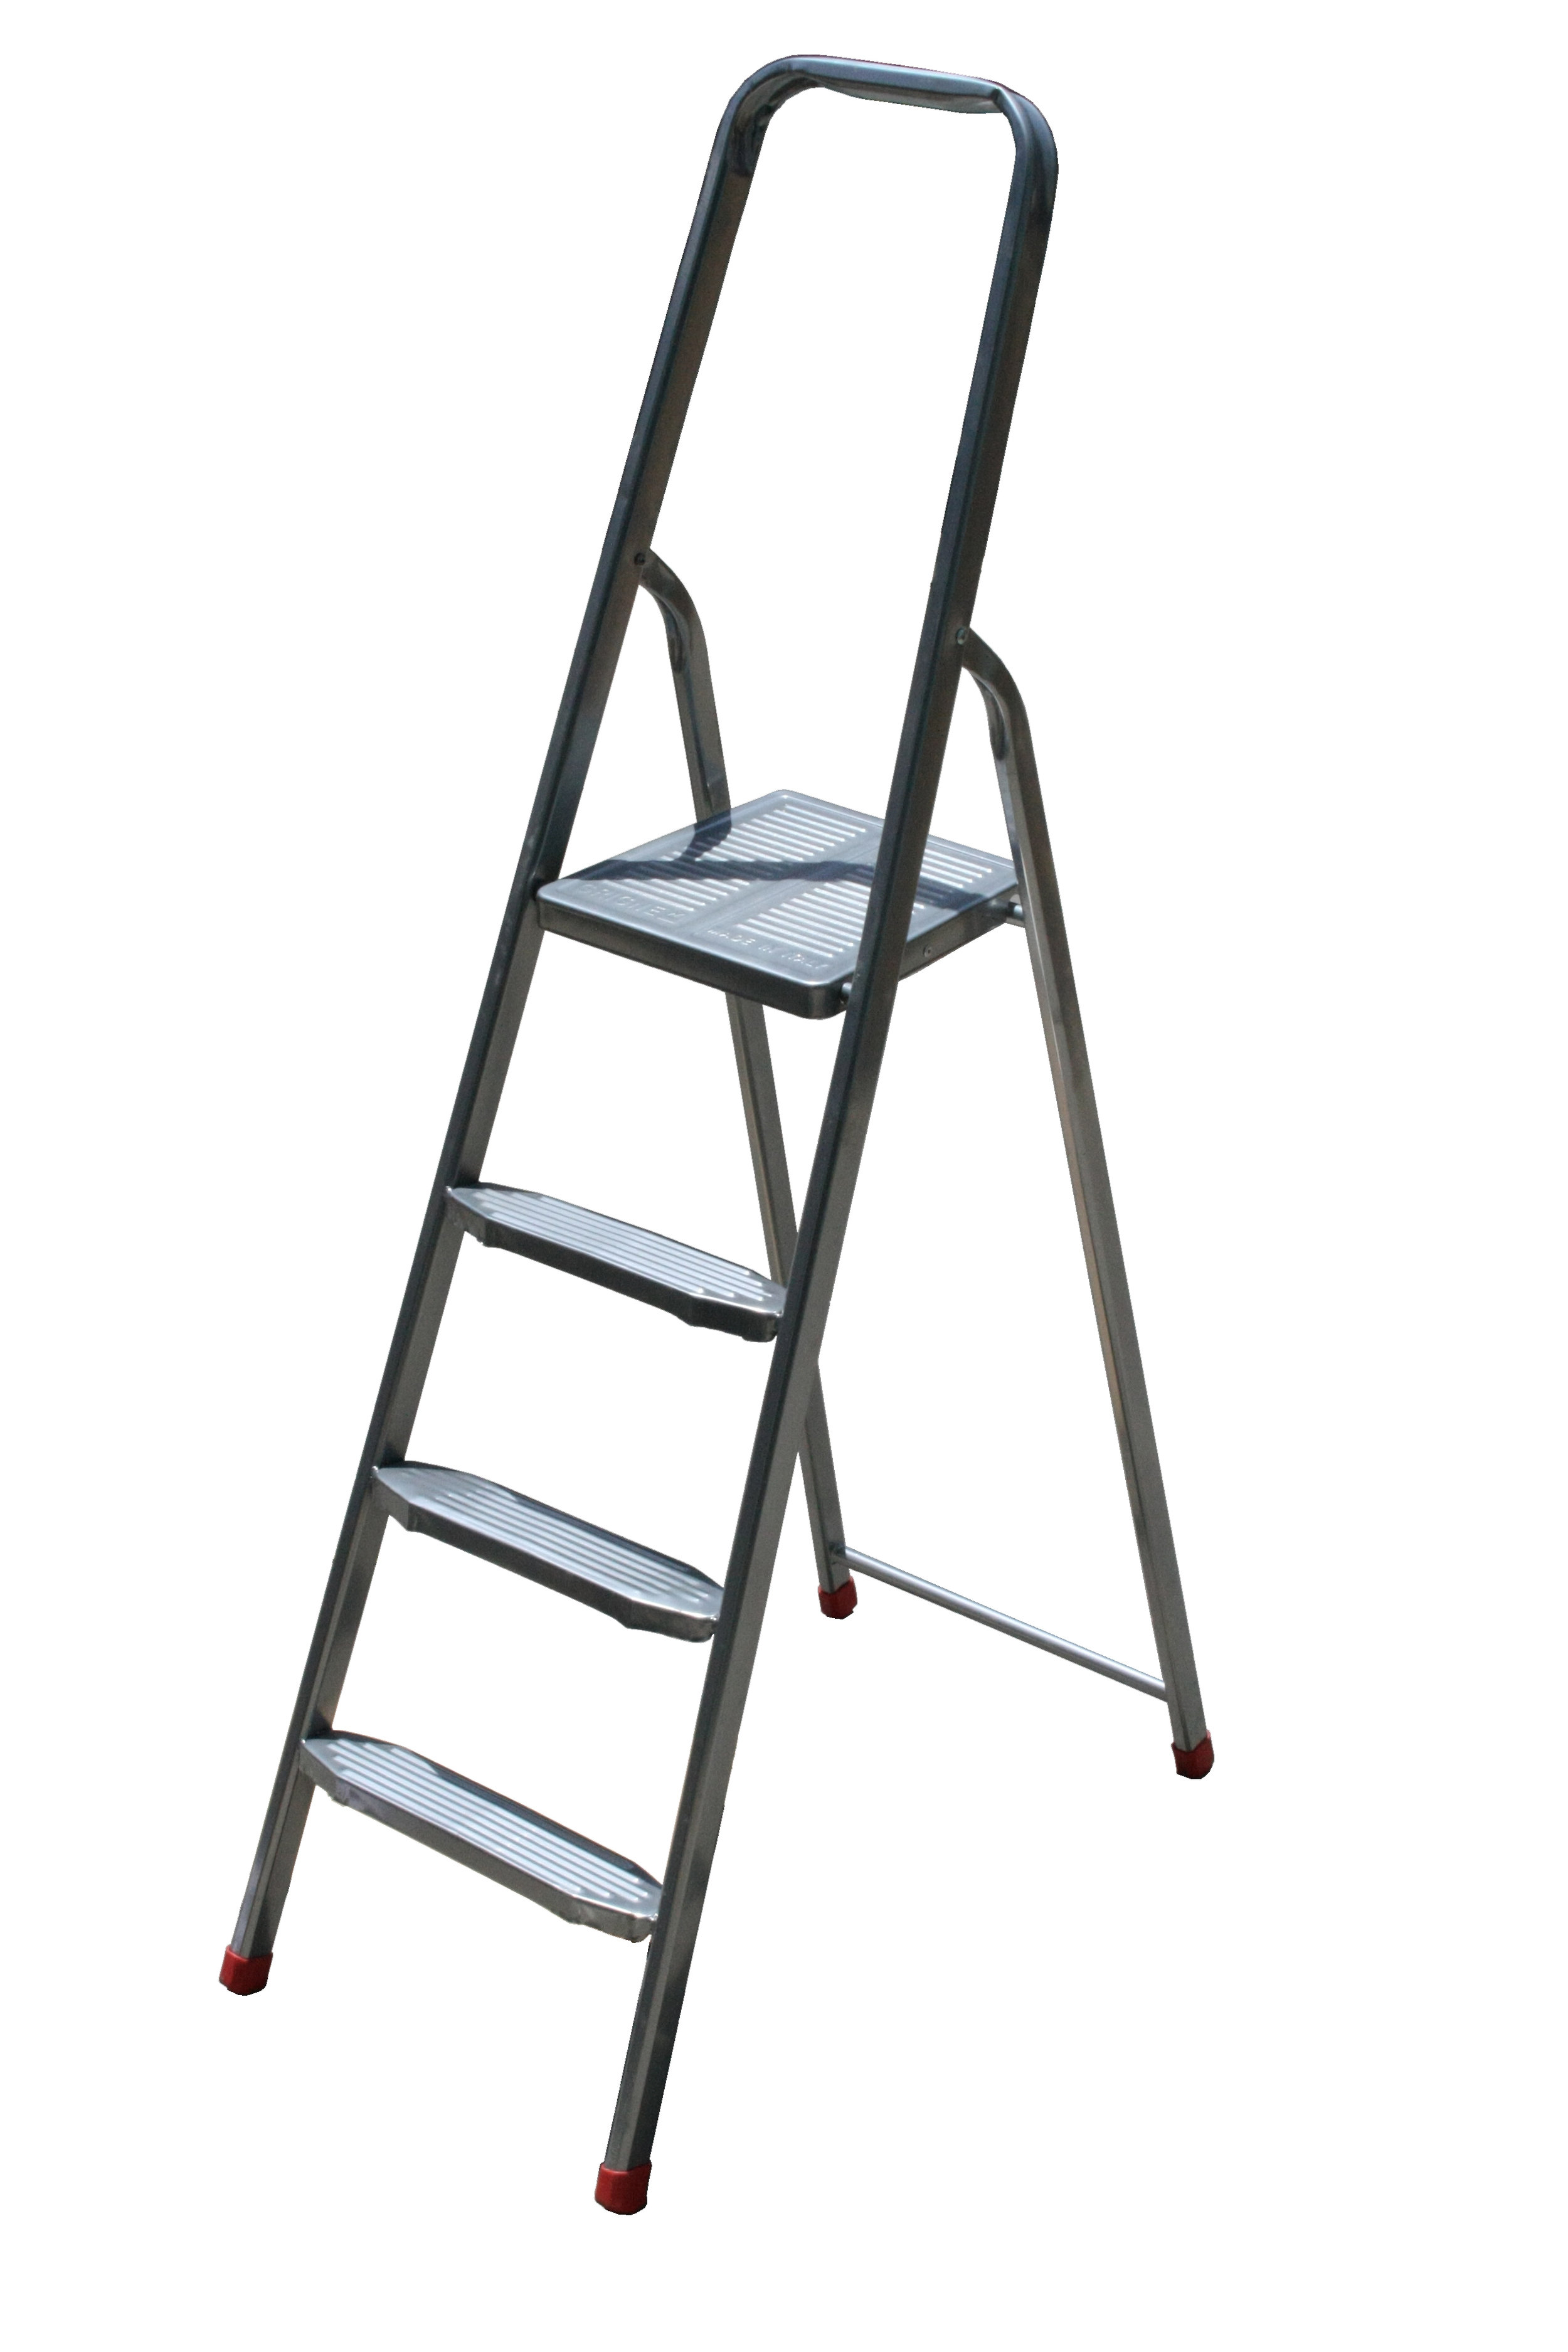 Steel ladder-4Steps.jpg